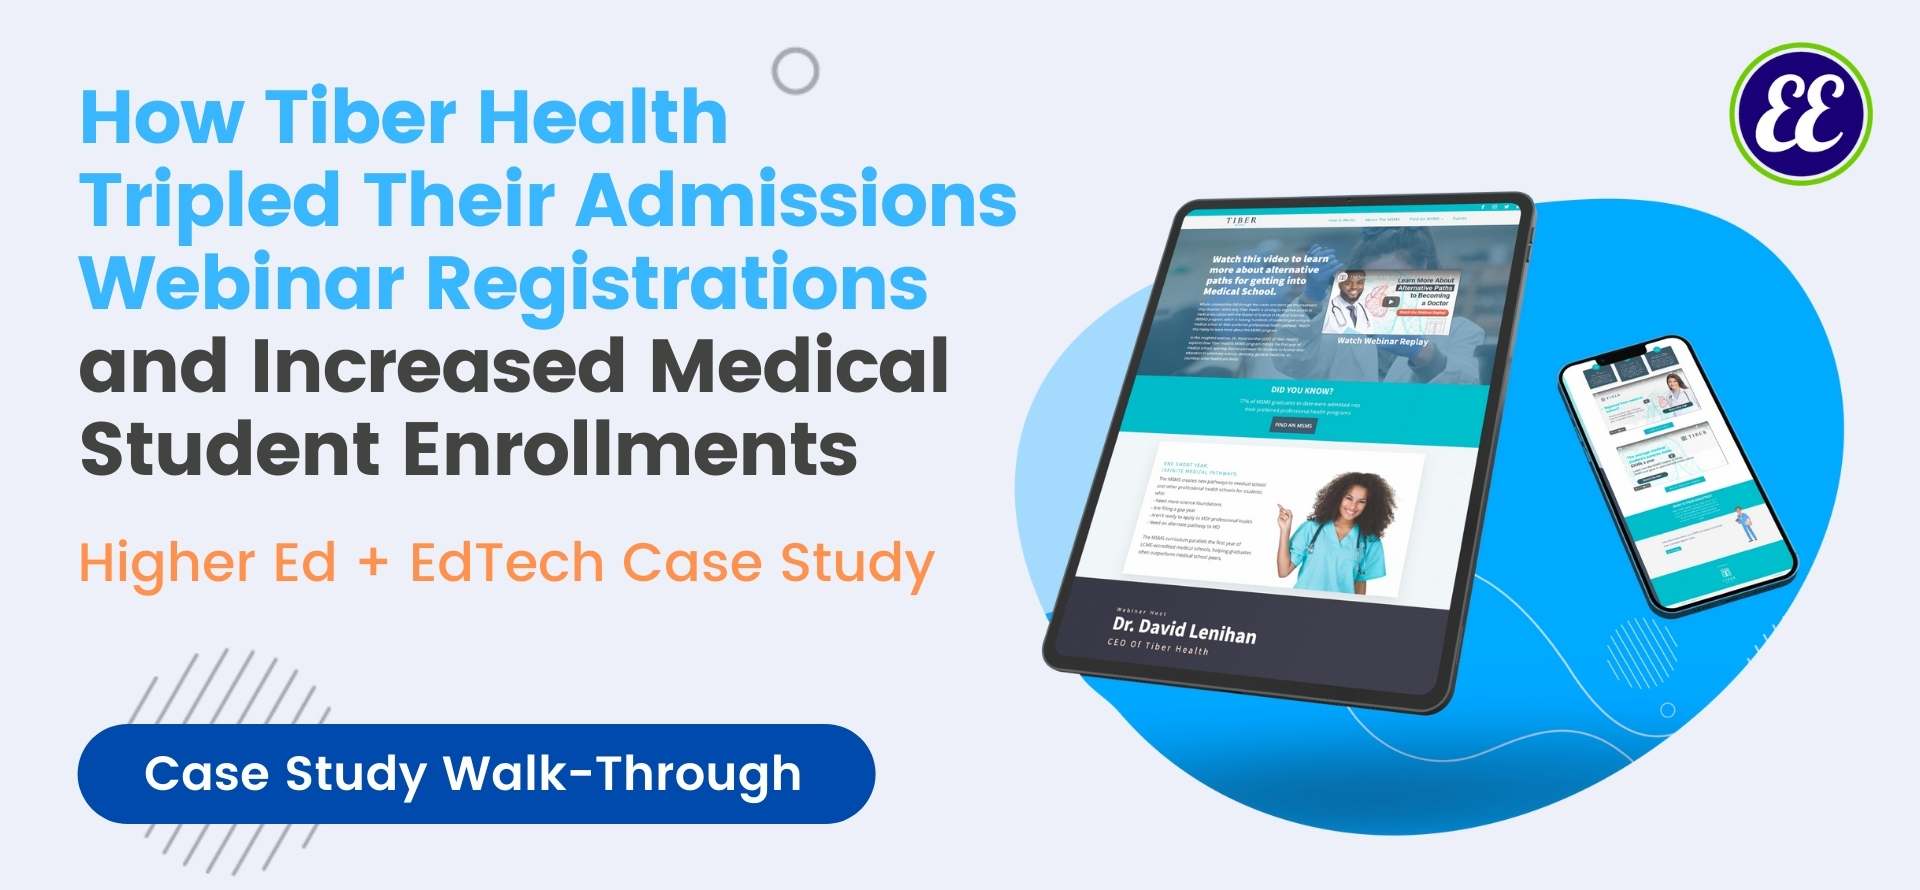 Higher Ed Marketing Case Study - Tiber Health Admissions Webinar Best Practice